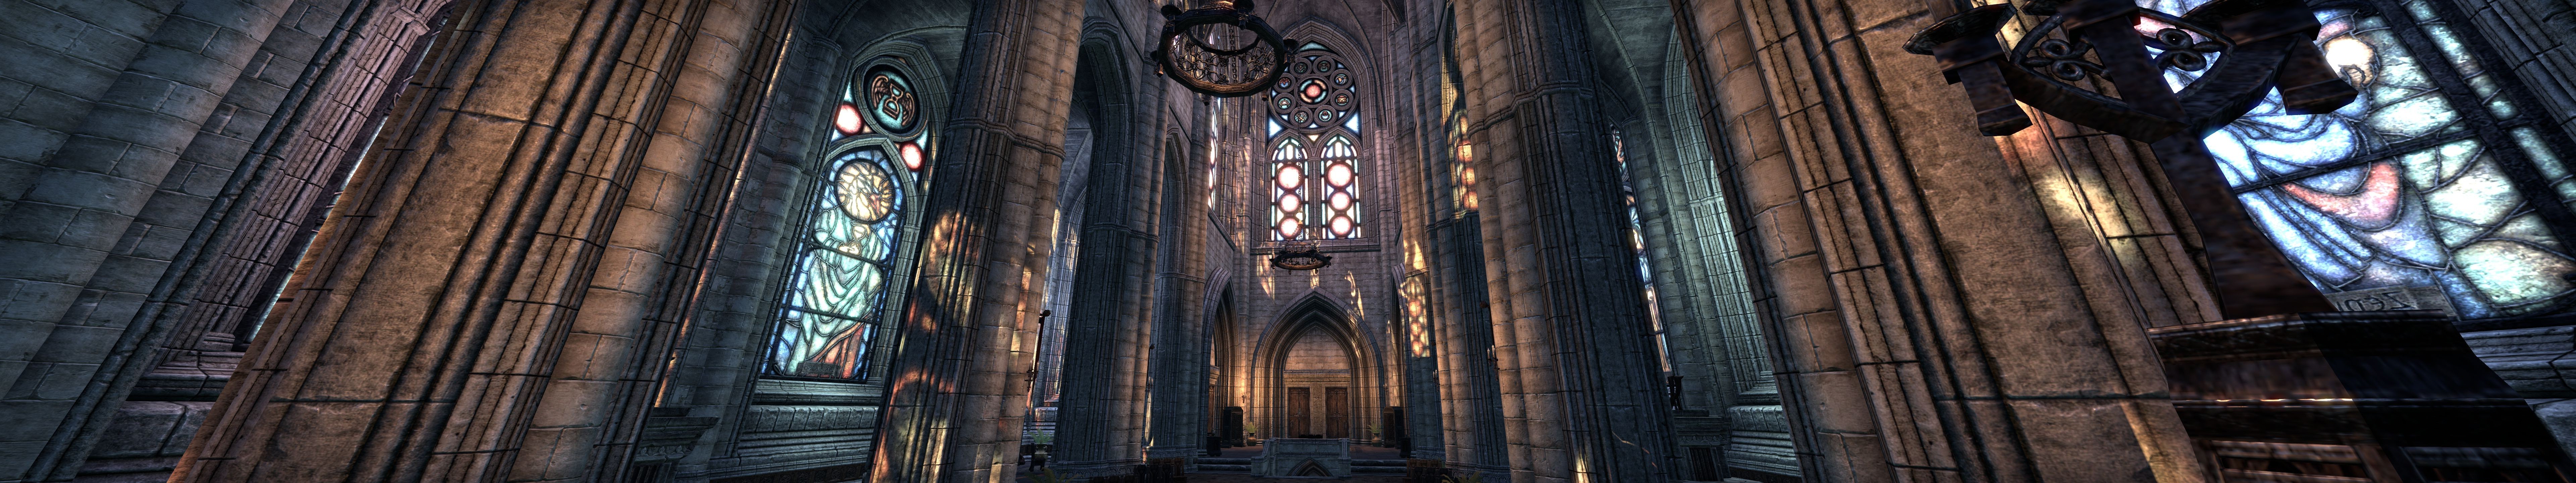 The Elder Scrolls Online, Quadruple Monitors, Church, Cathedral Wallpaper